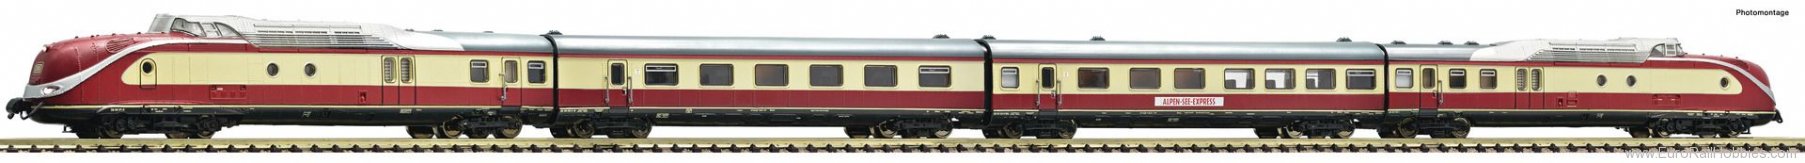 Fleischmann 741085 4 piece set: Diesel multiple unit class 601, 